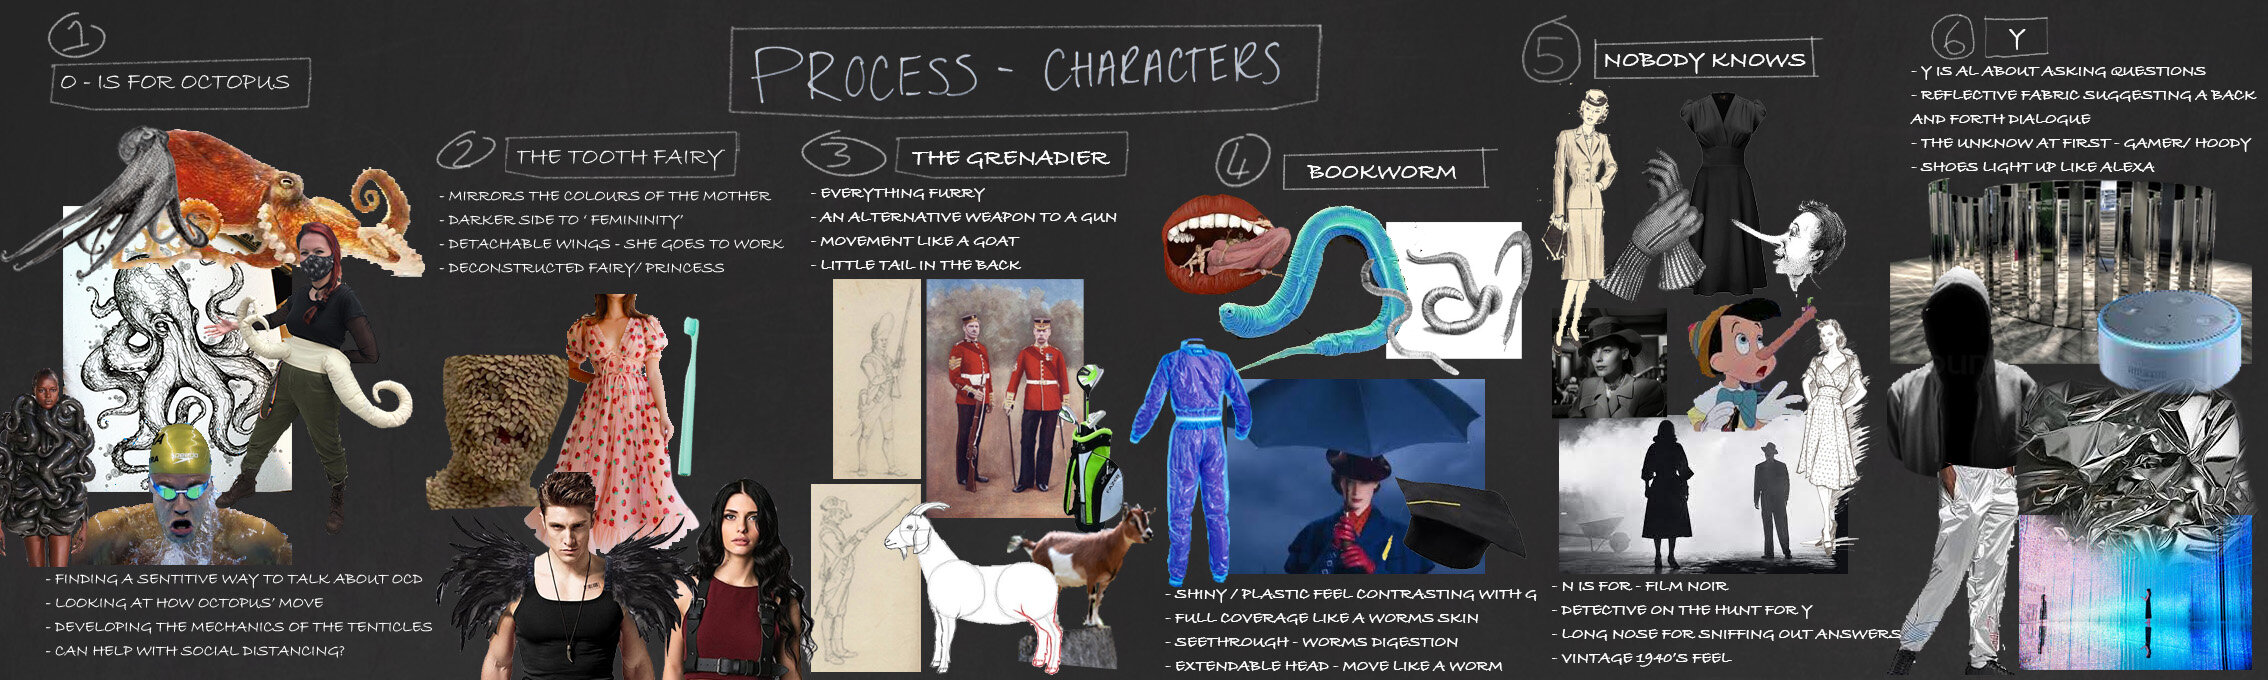 Process - Characters.jpg